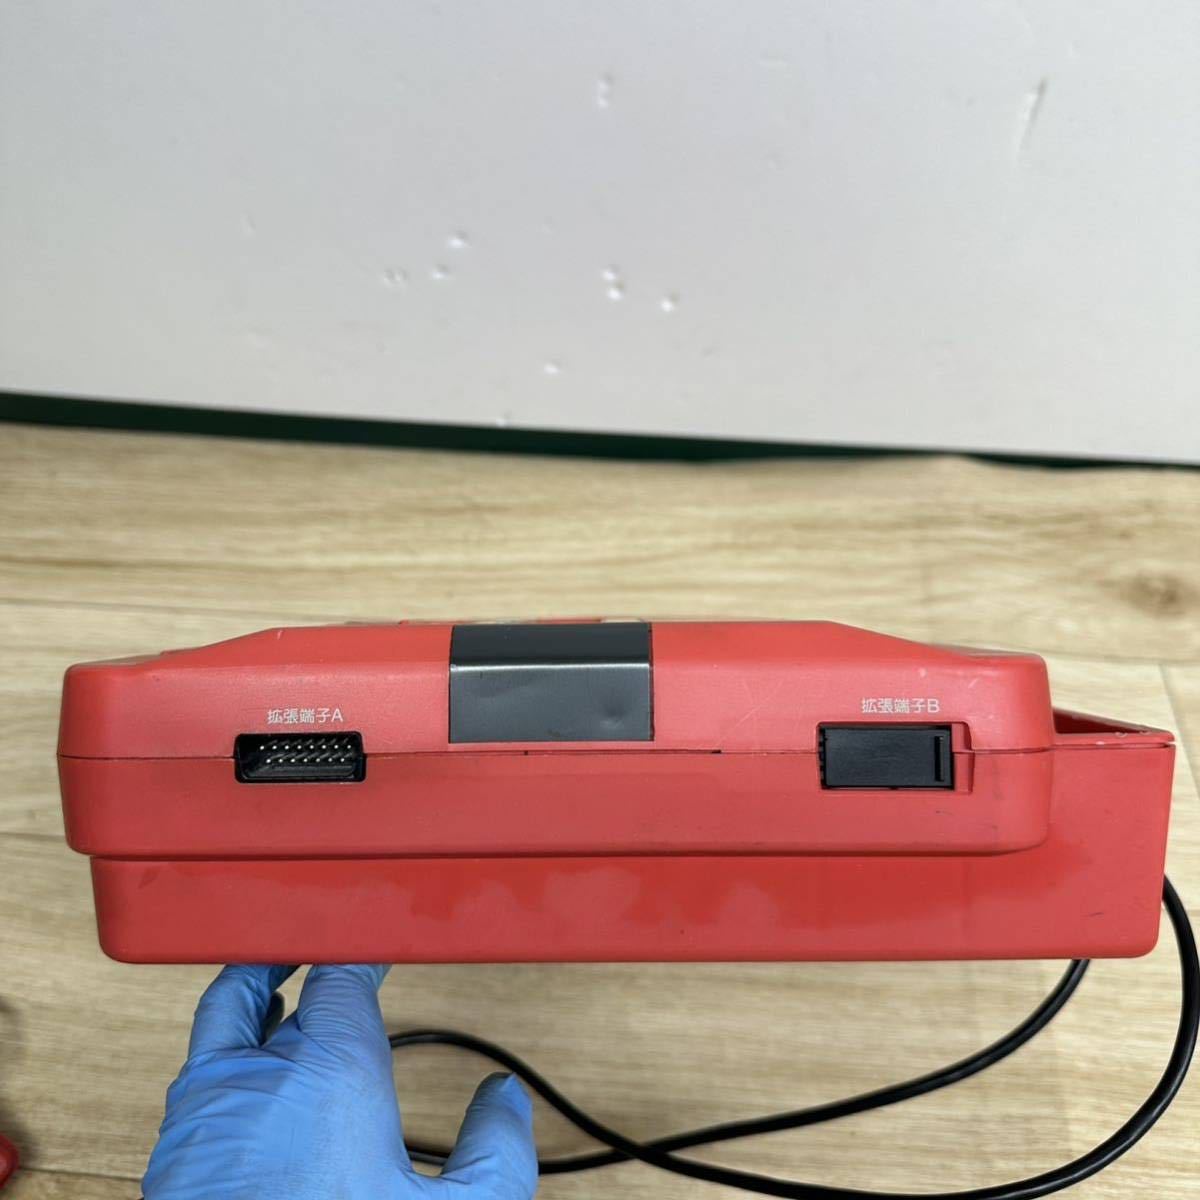 SHARP sharp twin Famicom AN-500R TWIN FAMICOM работоспособность не проверялась [ труба 2619V]